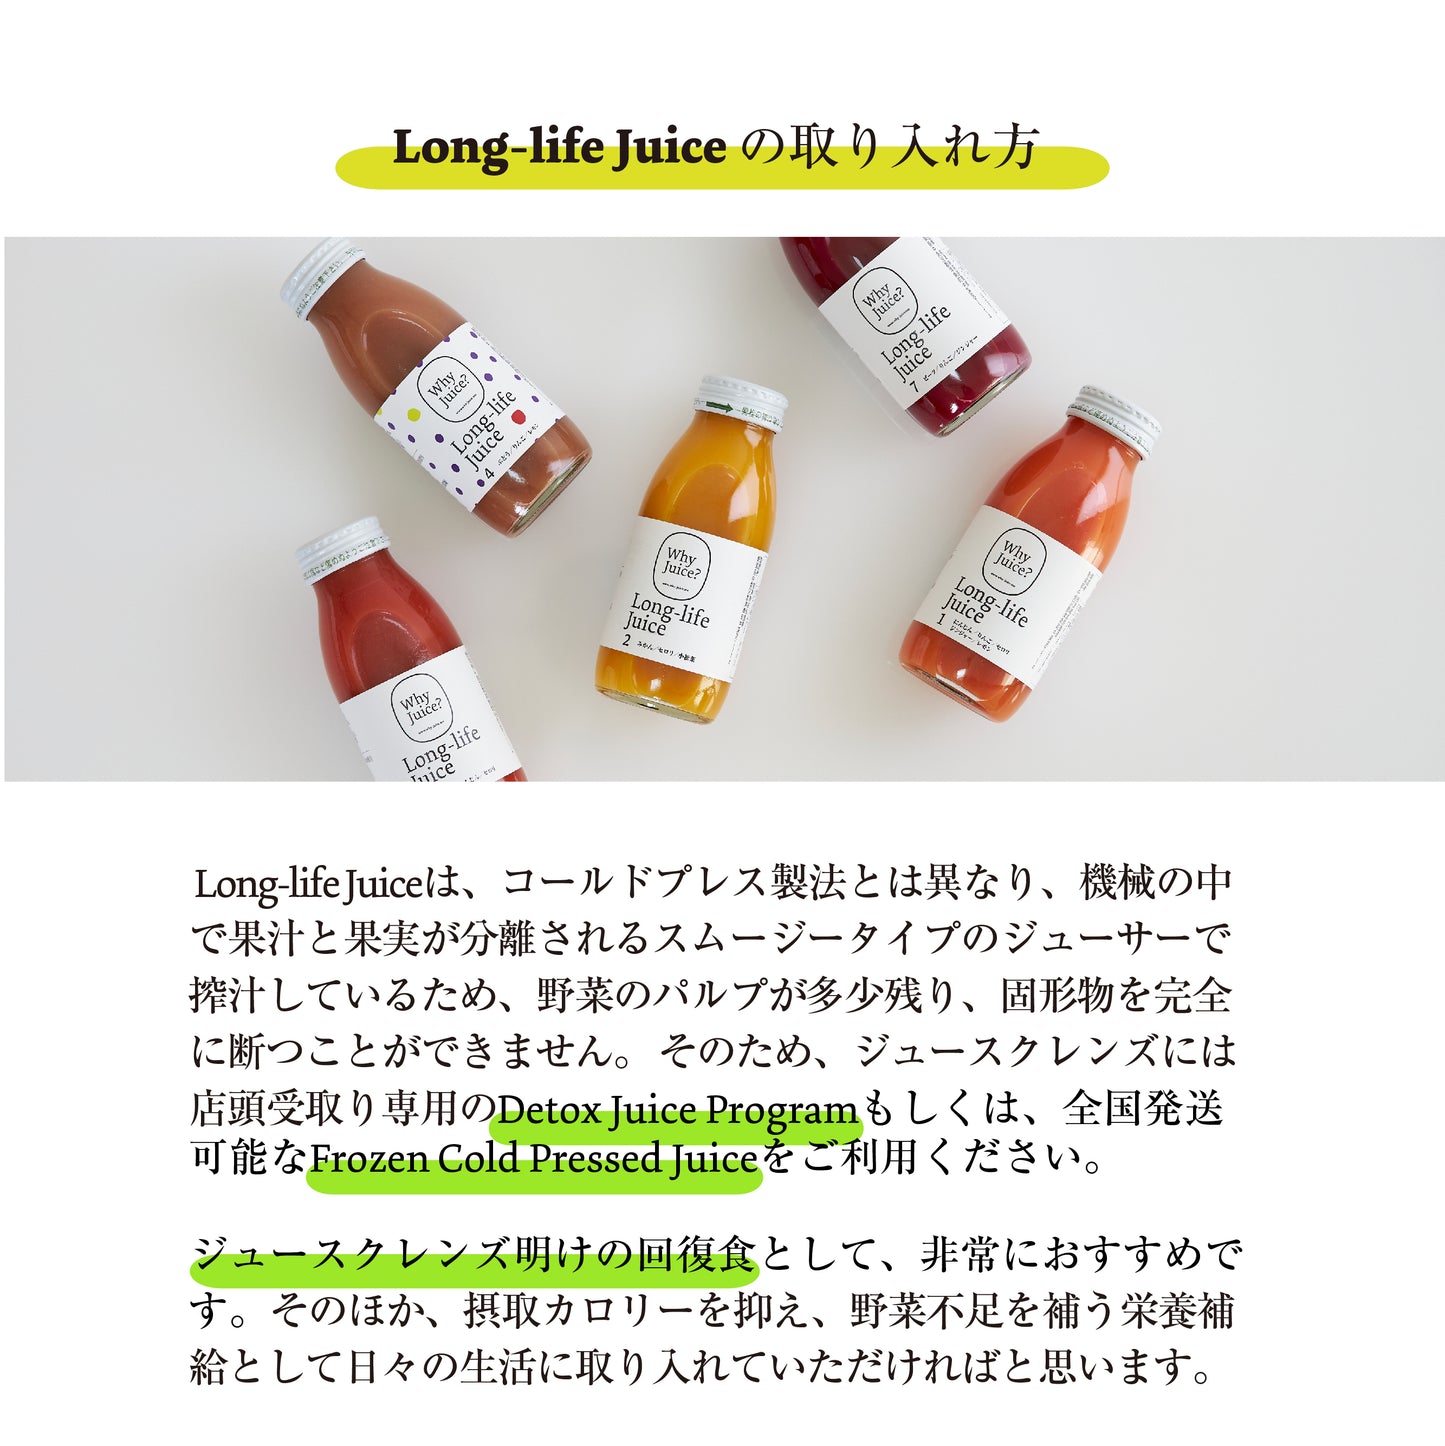 Long-life Juice4：ぶどうミックス (20本入)